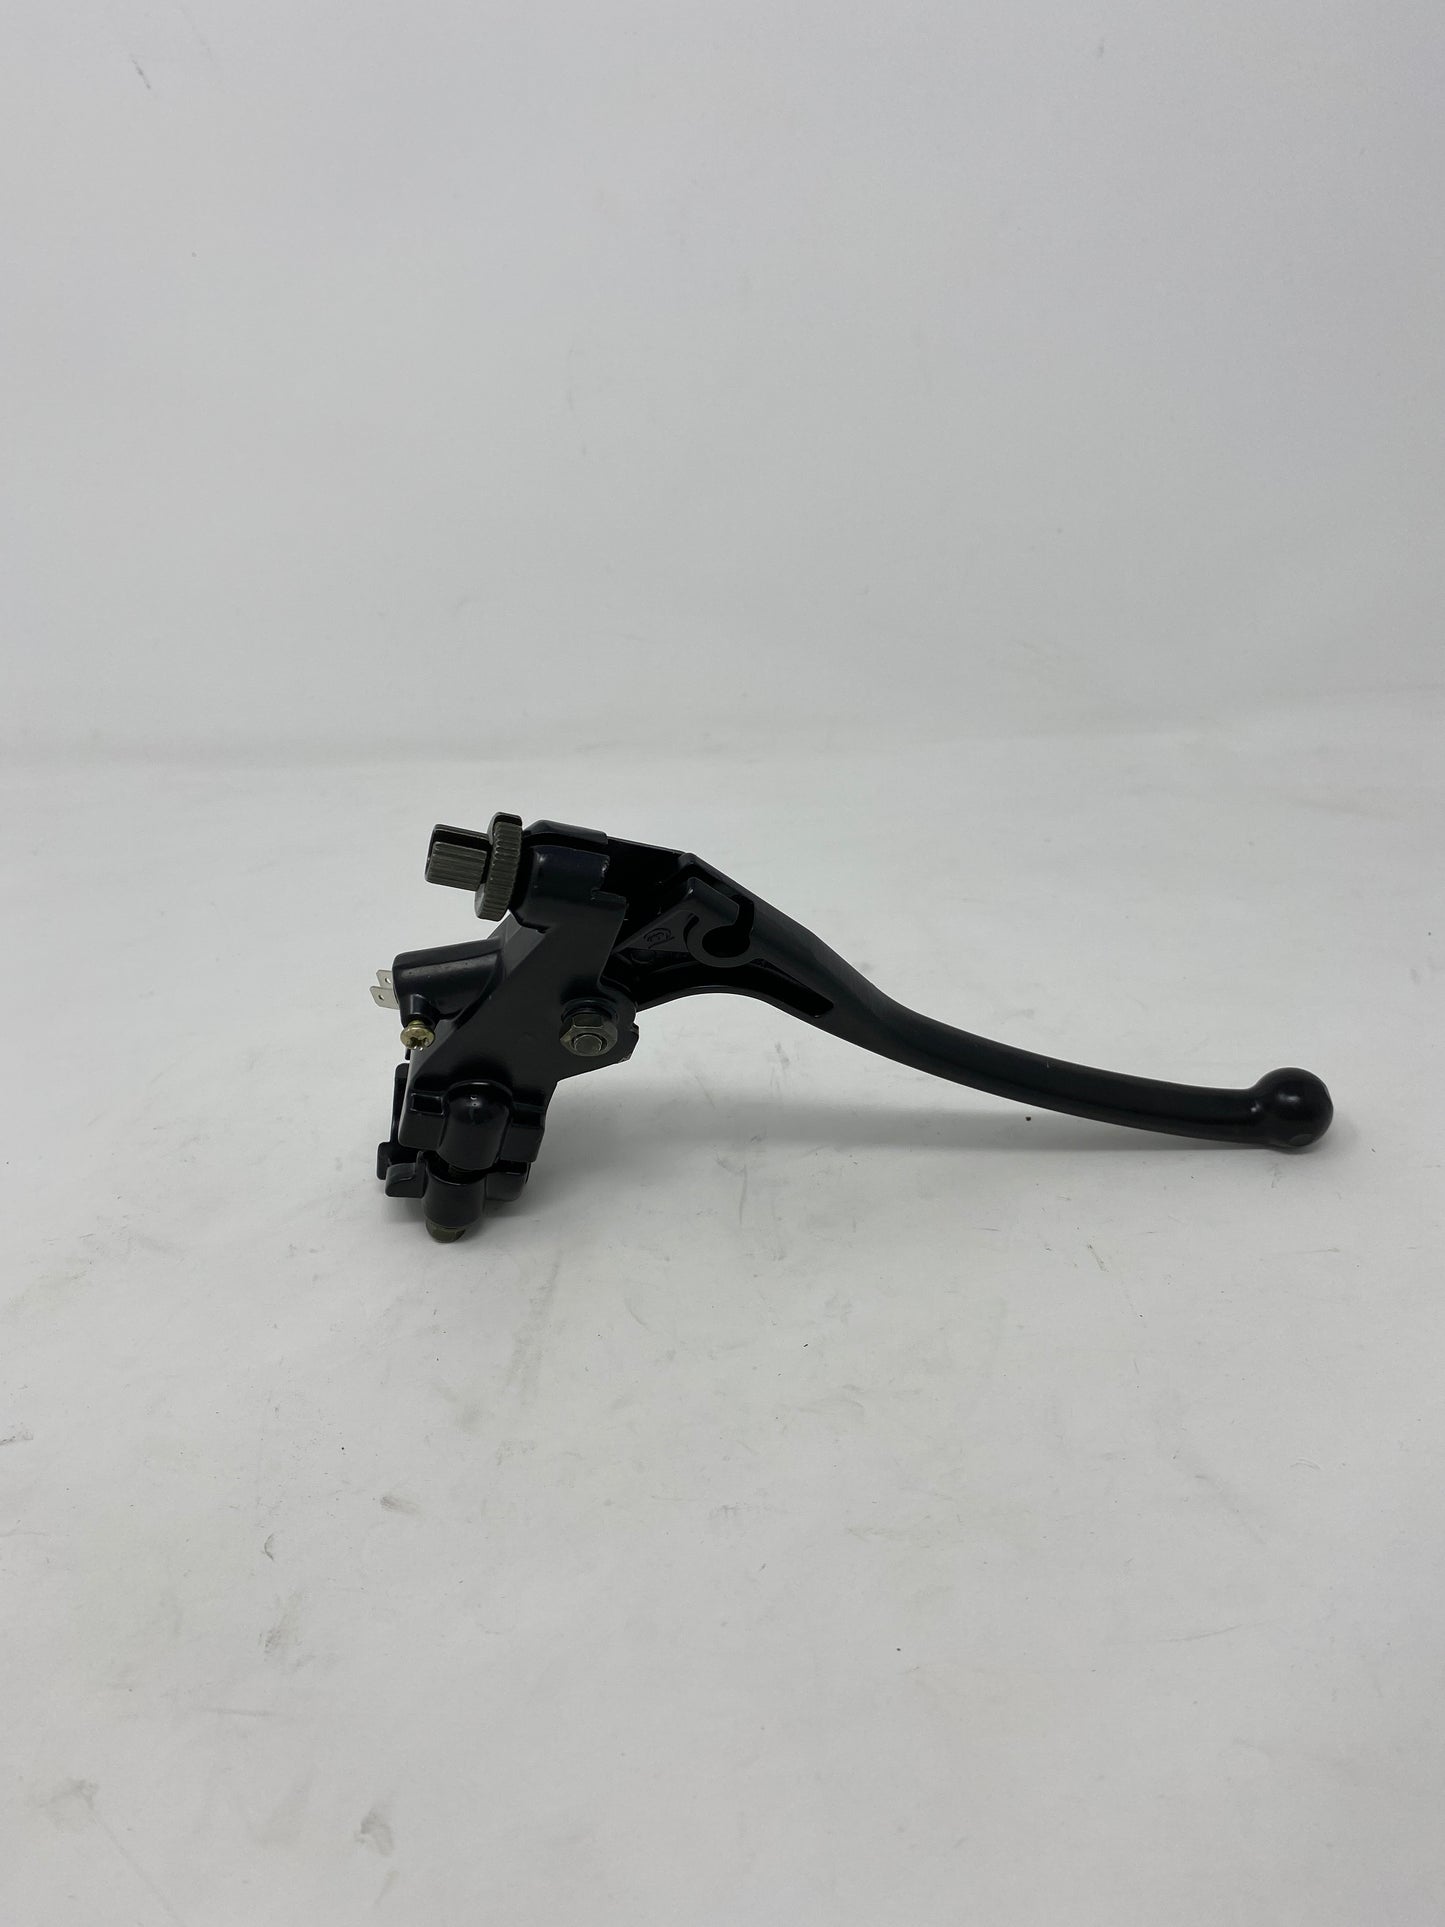 Venom X22R clutch lever online for sale. DF250RTS clutch perch